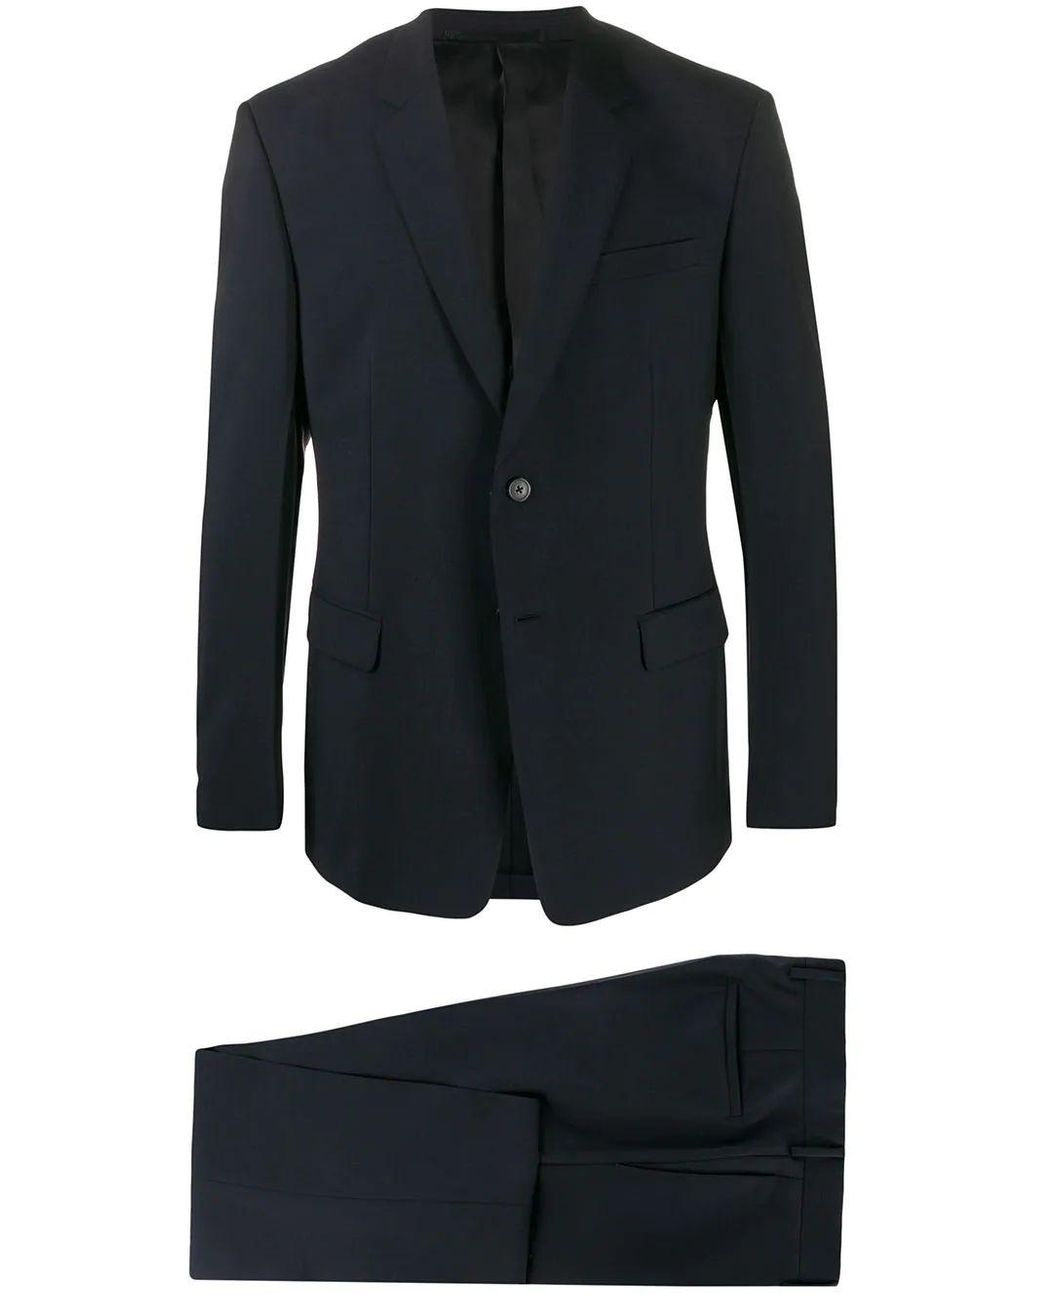 Prada Wool Suit in Black for Men - Lyst